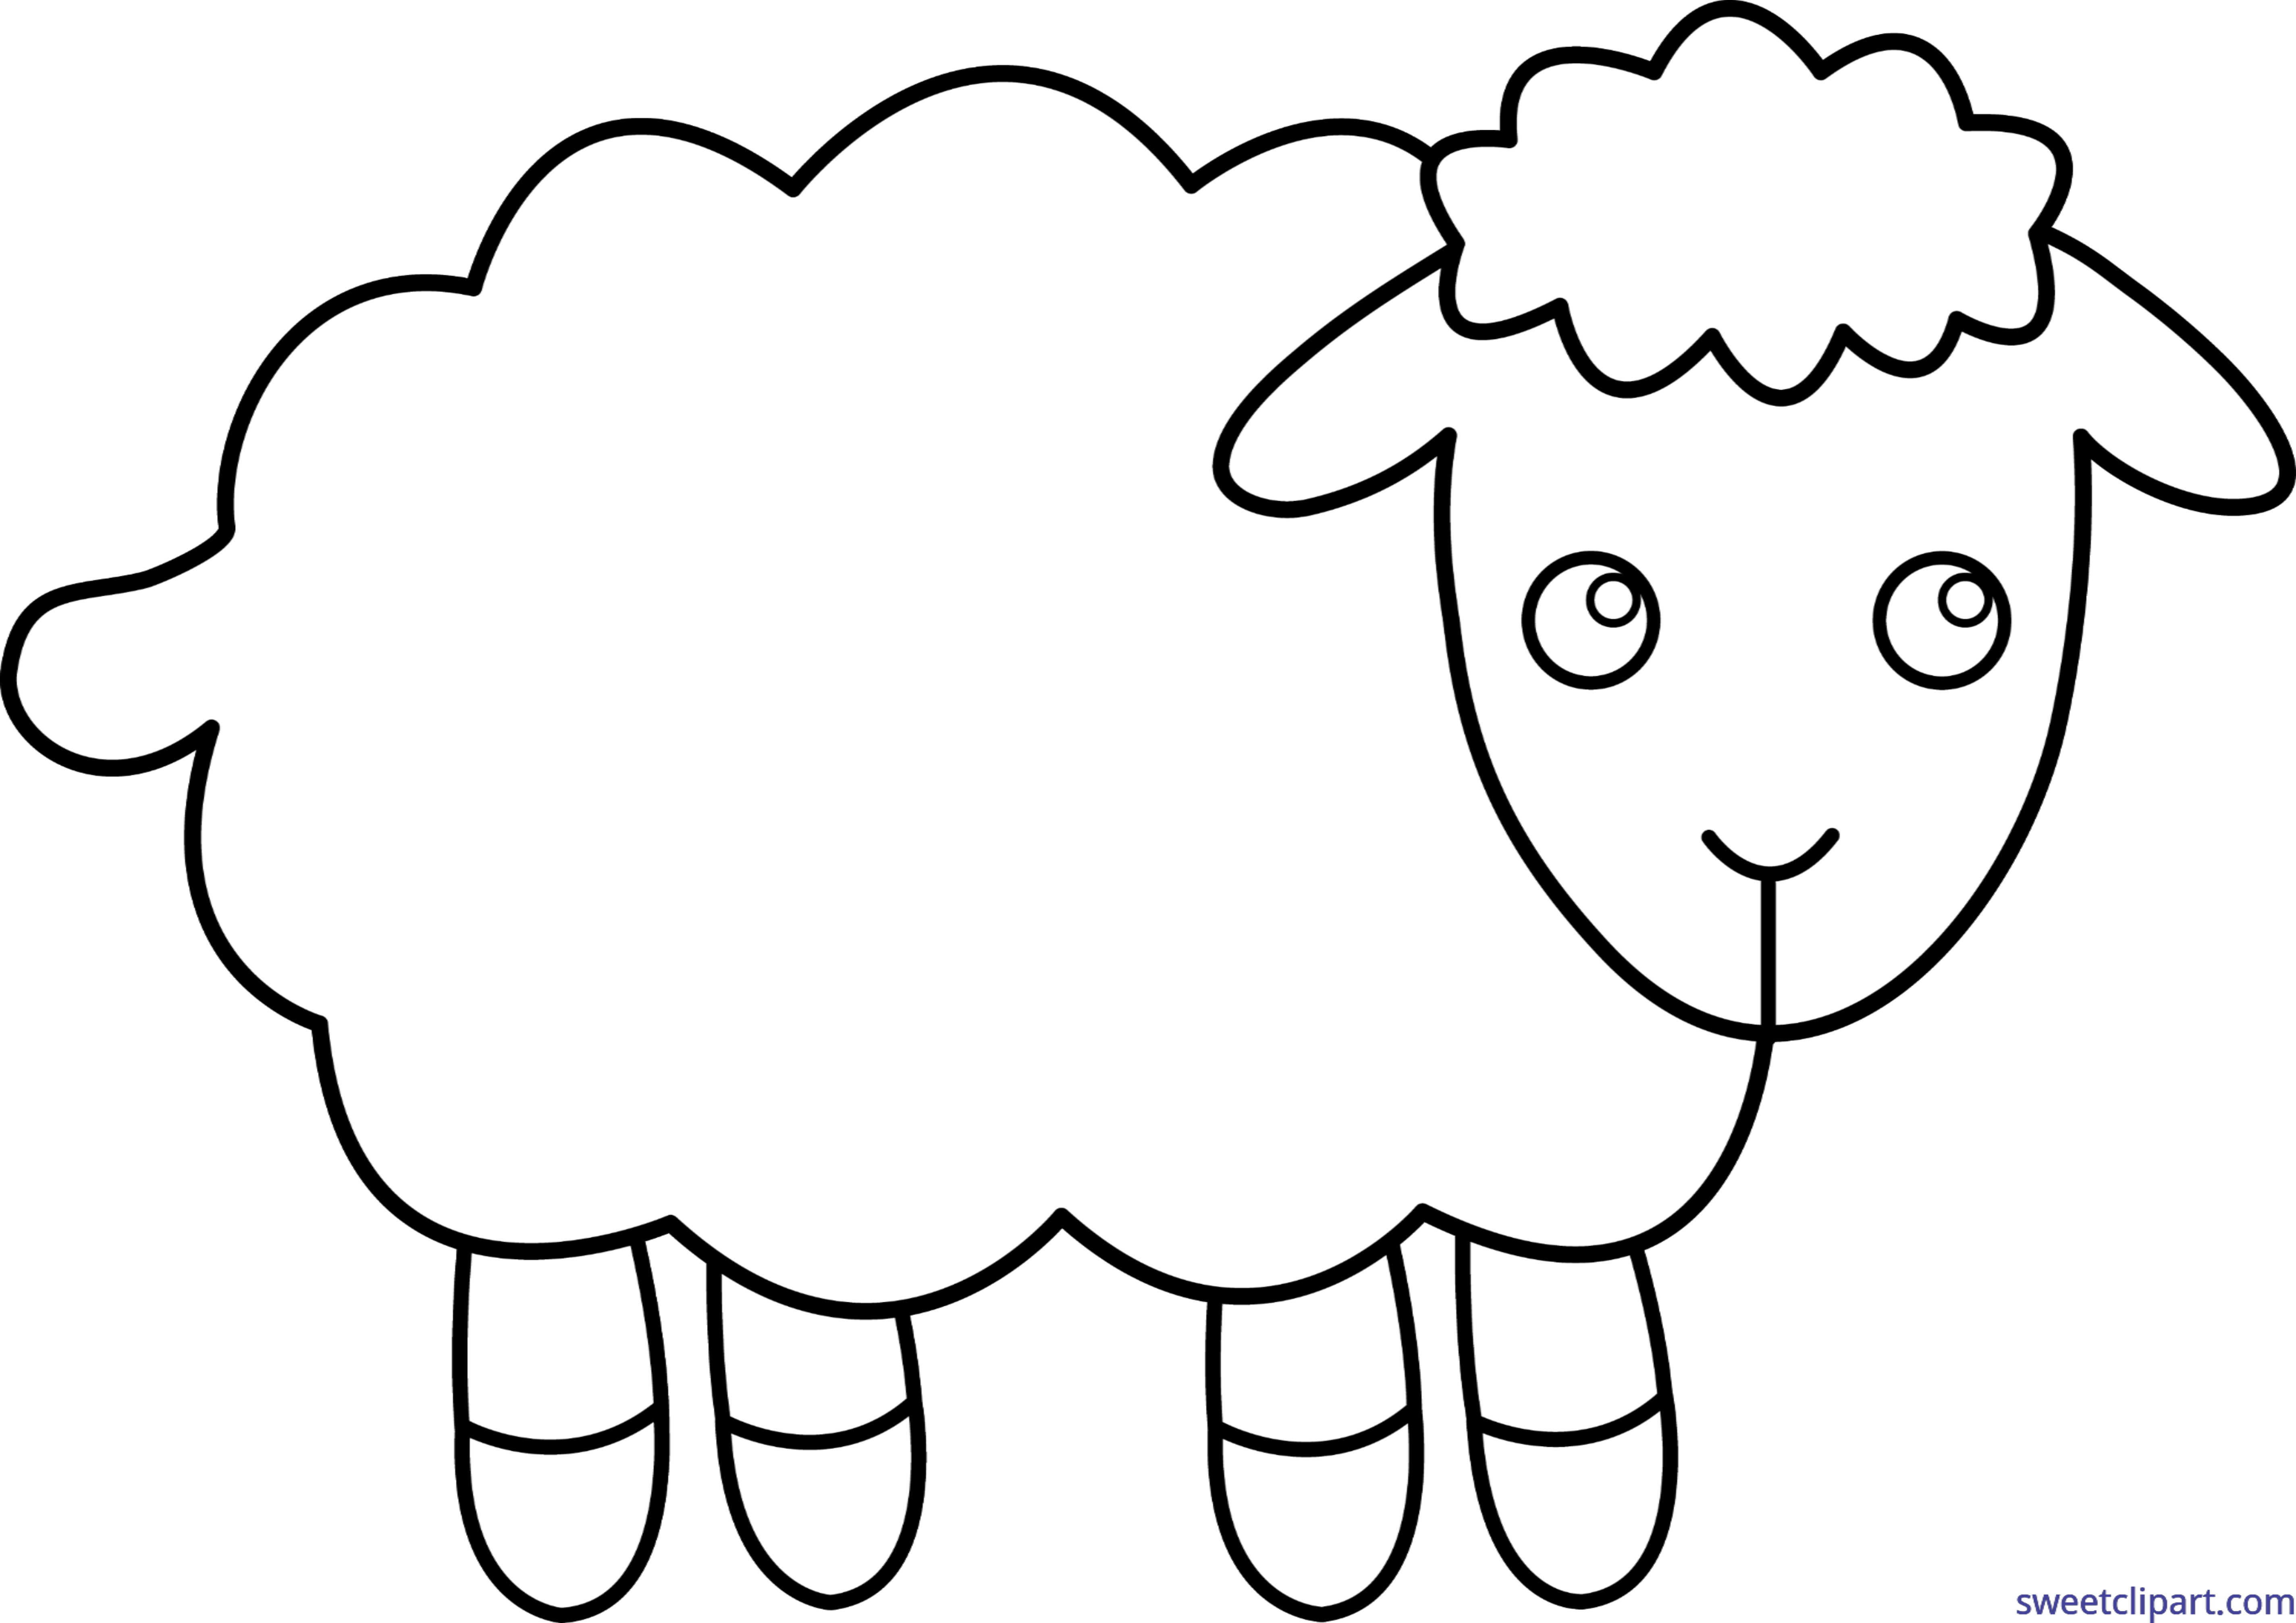 White Sheep Clip Art at Clker.com - vector clip art online - Clip Art ...